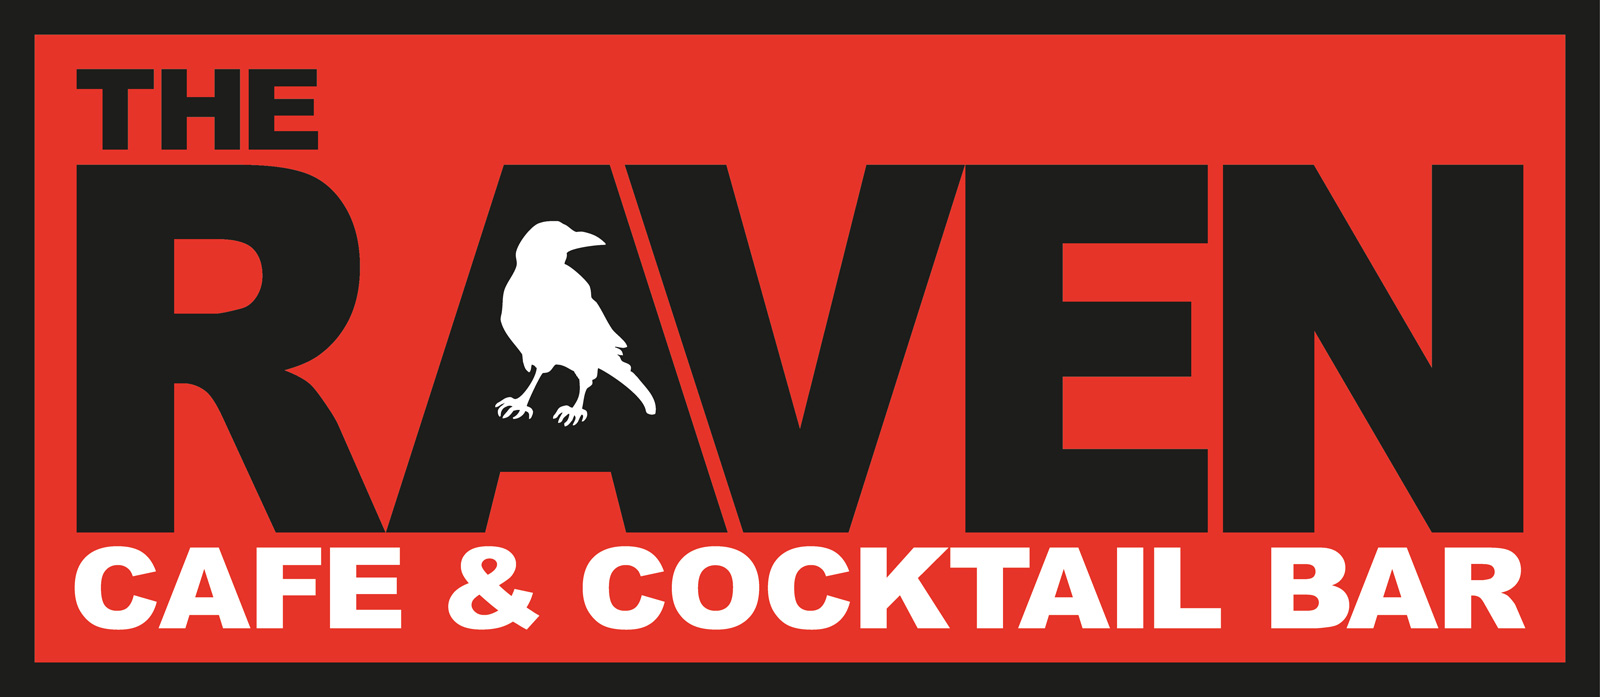 Graphic and creative restaurant menu design - The Raven